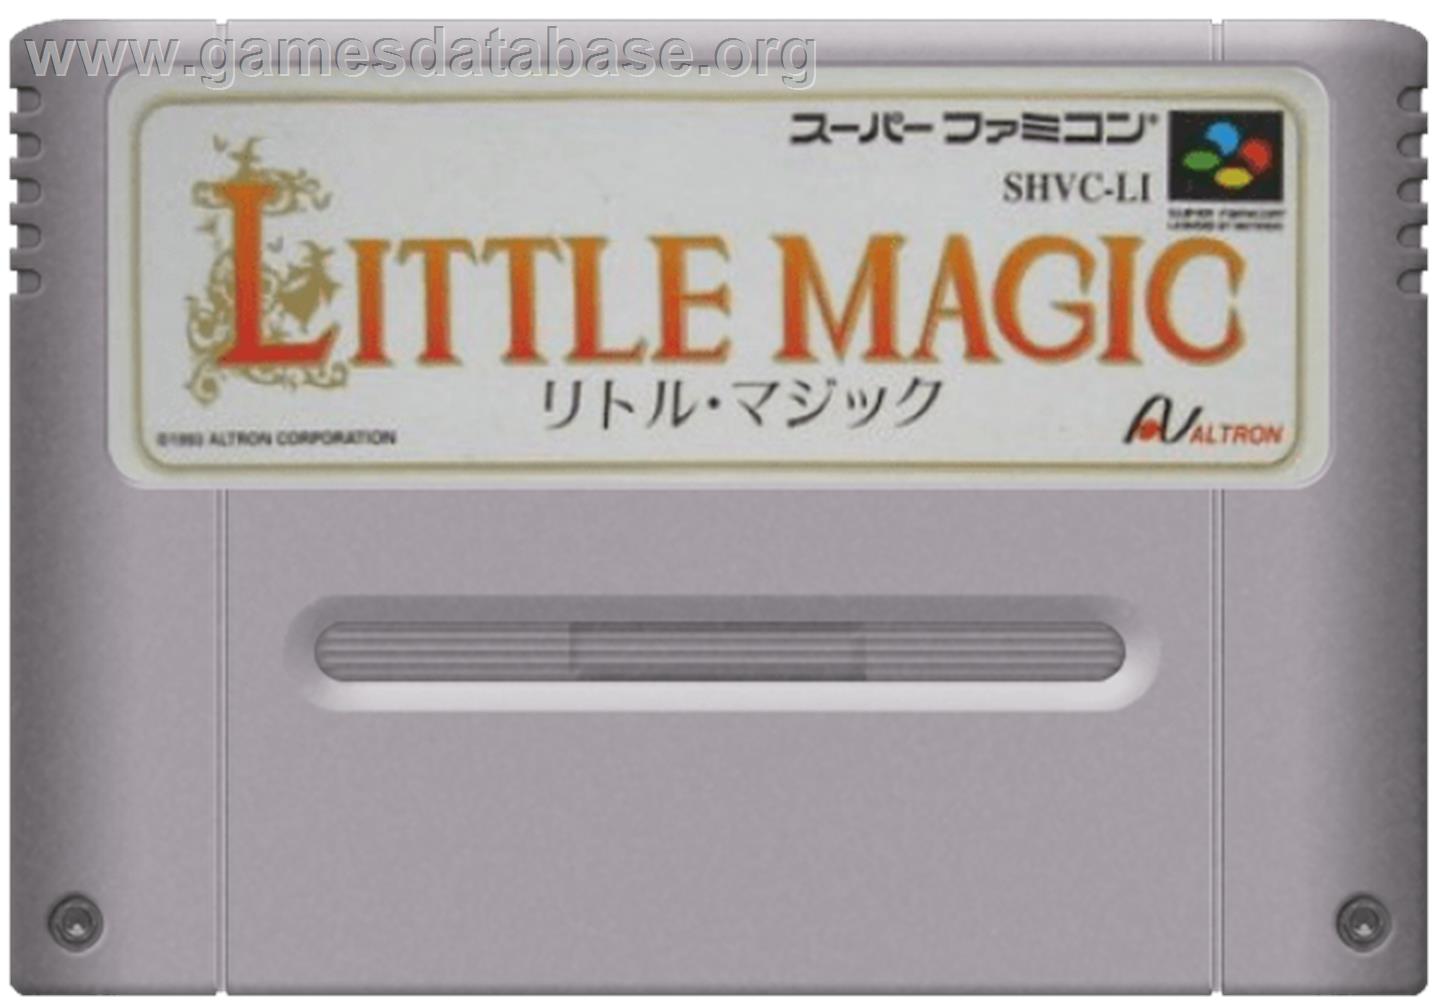 Little Magic - Nintendo SNES - Artwork - Cartridge